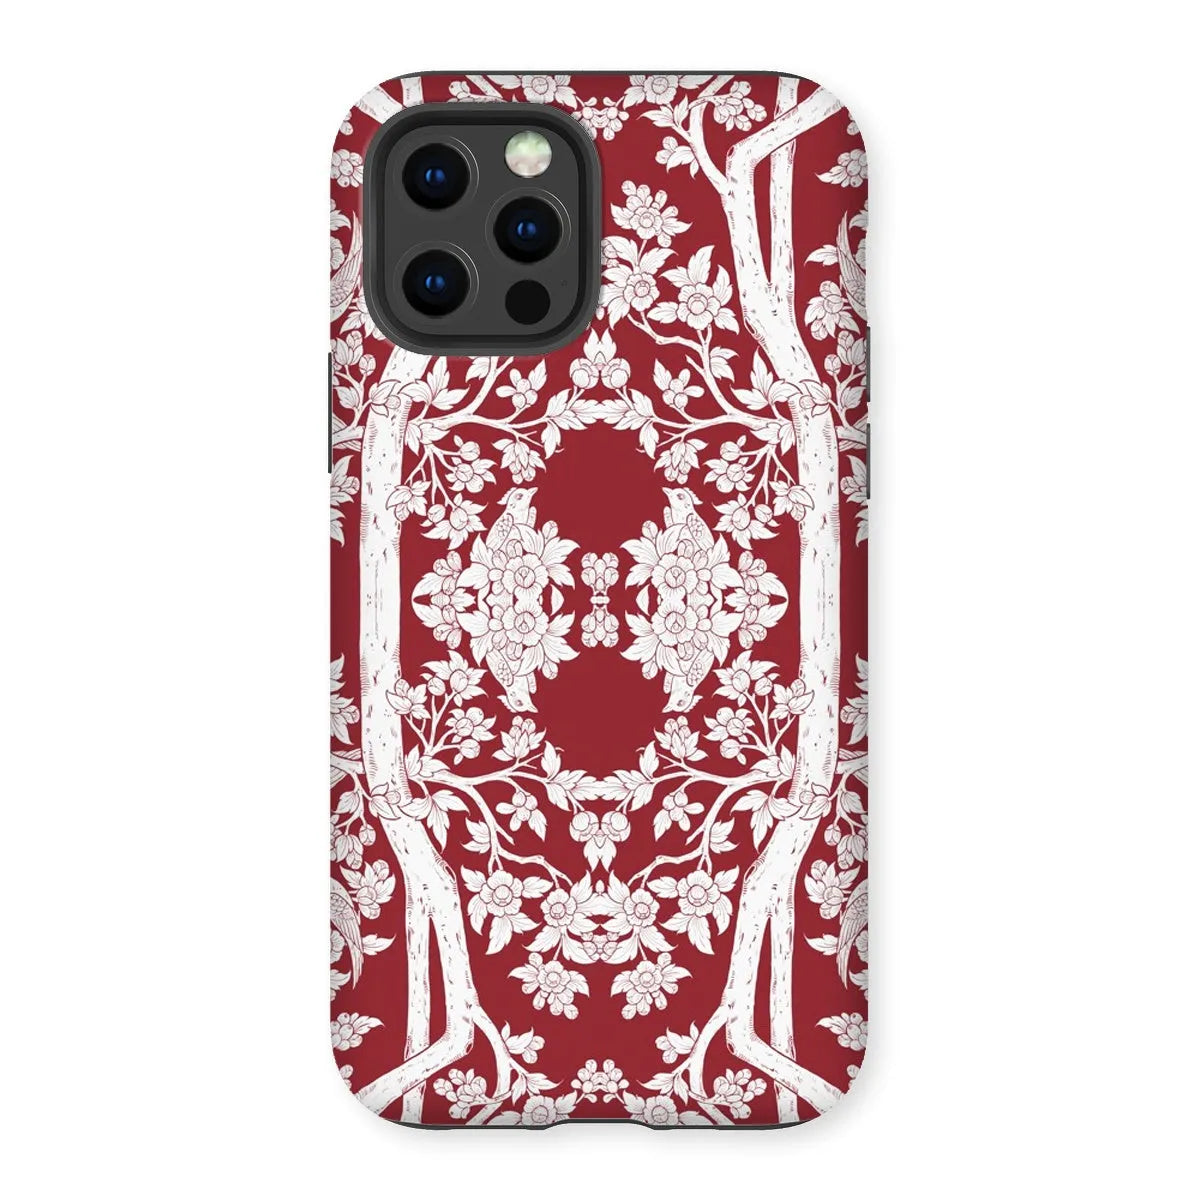 Aviary Red Aesthetic Pattern Art Phone Case - Iphone 12 Pro / Matte - Mobile Phone Cases - Aesthetic Art